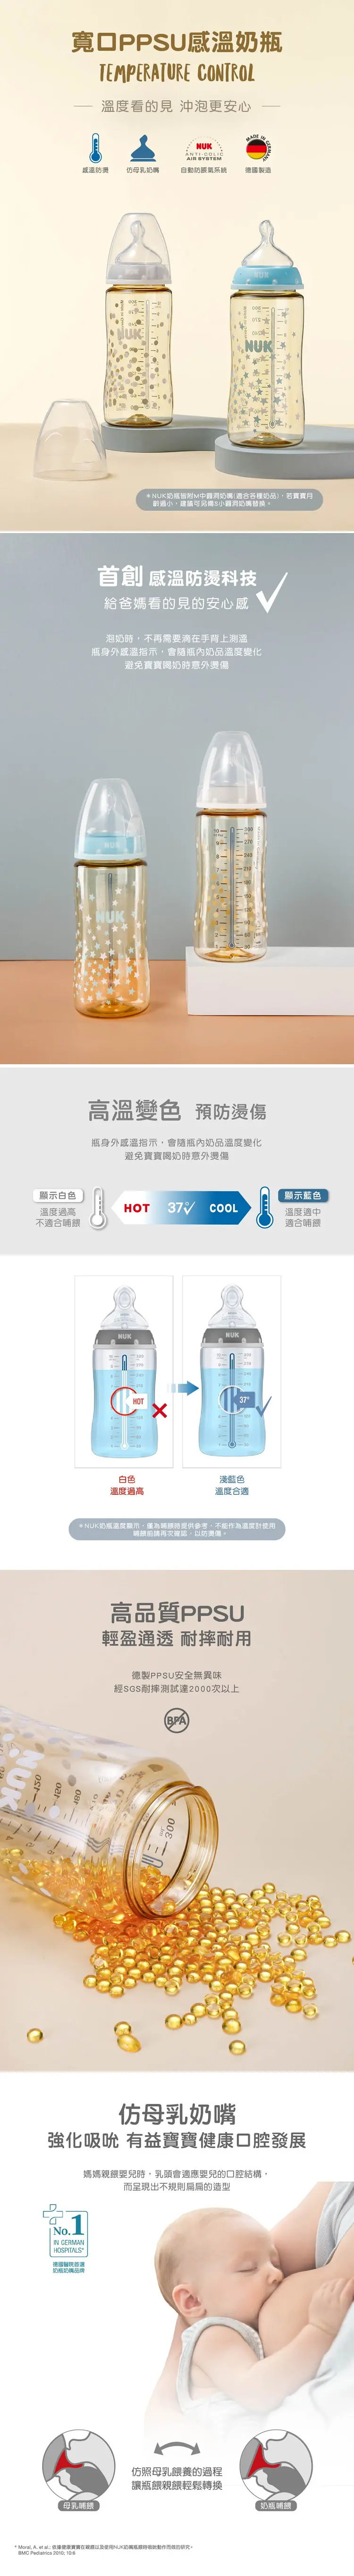 Nuk Premium Choice PPSU感溫寬口徑奶瓶